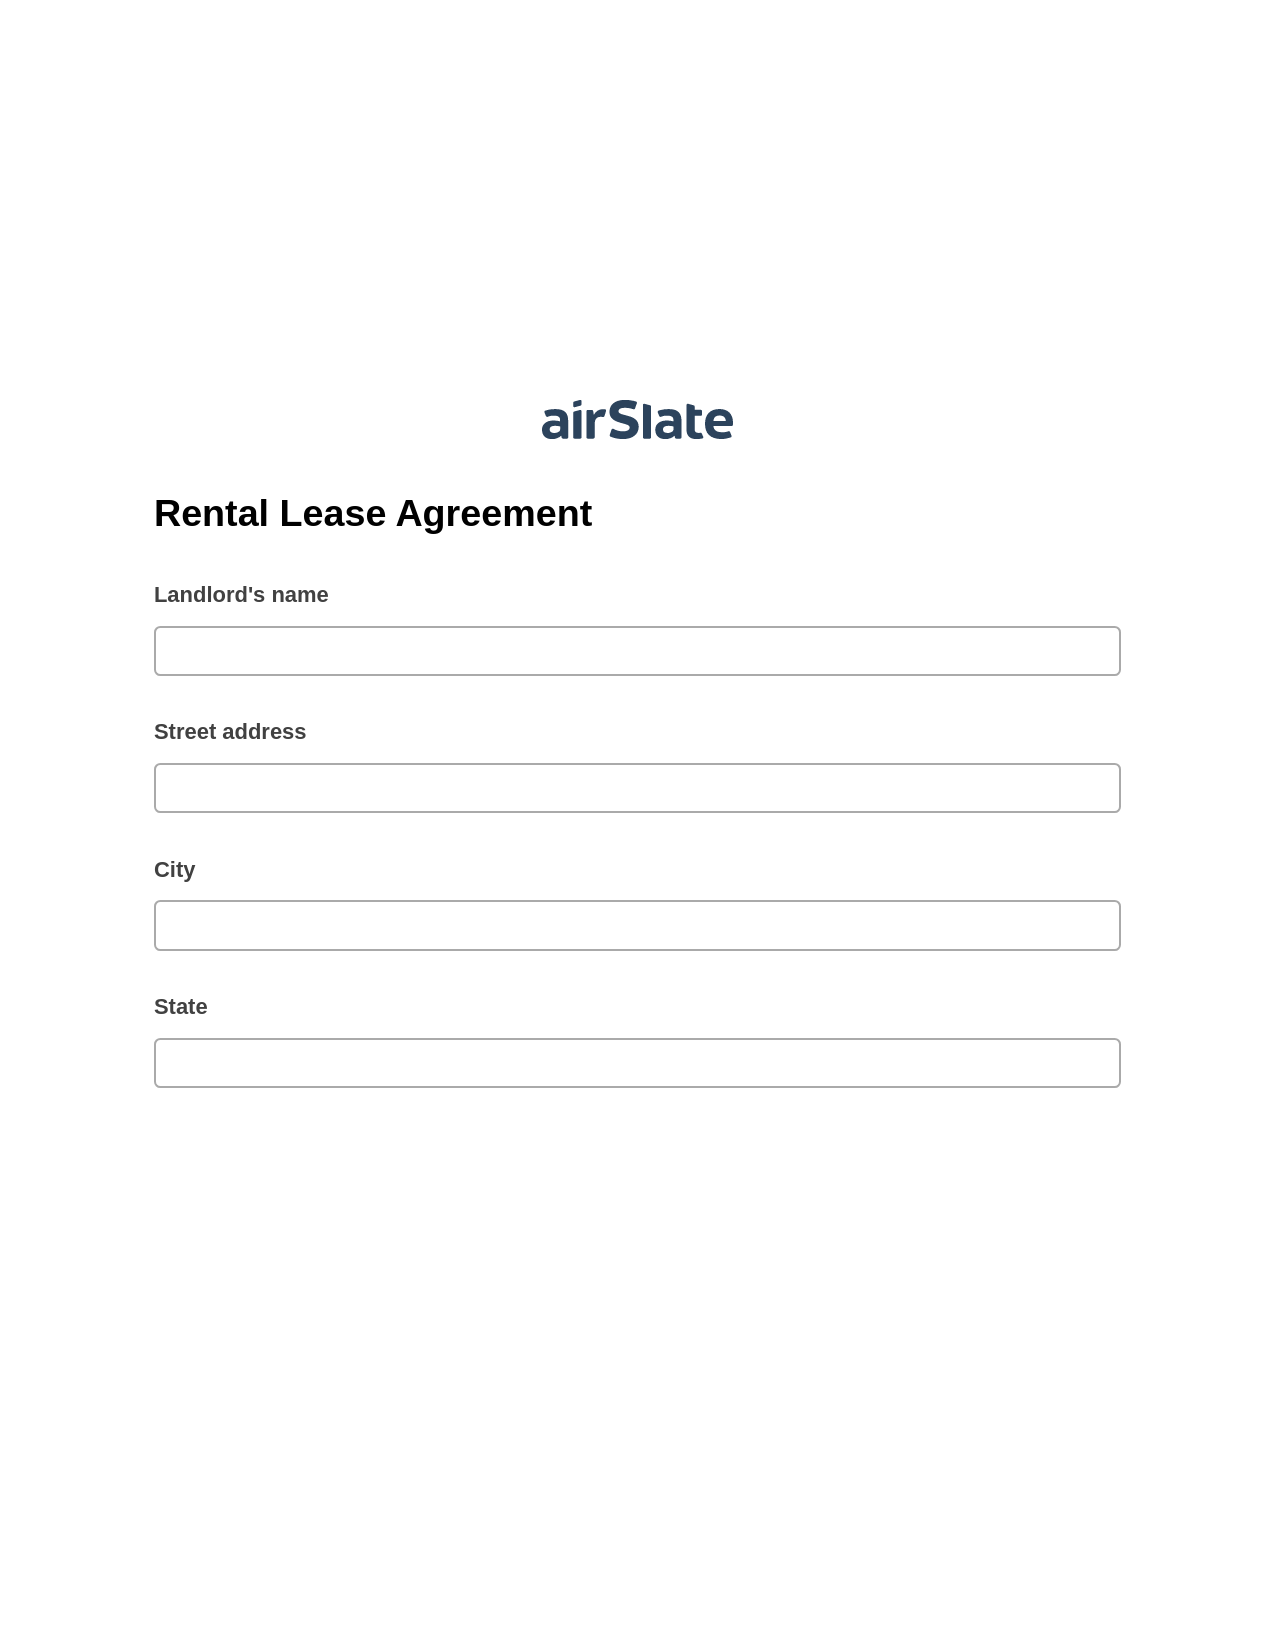 Rental Lease Agreement Pre-fill from Google Sheets Bot, Slack Notification Bot, Export to Google Sheet Bot